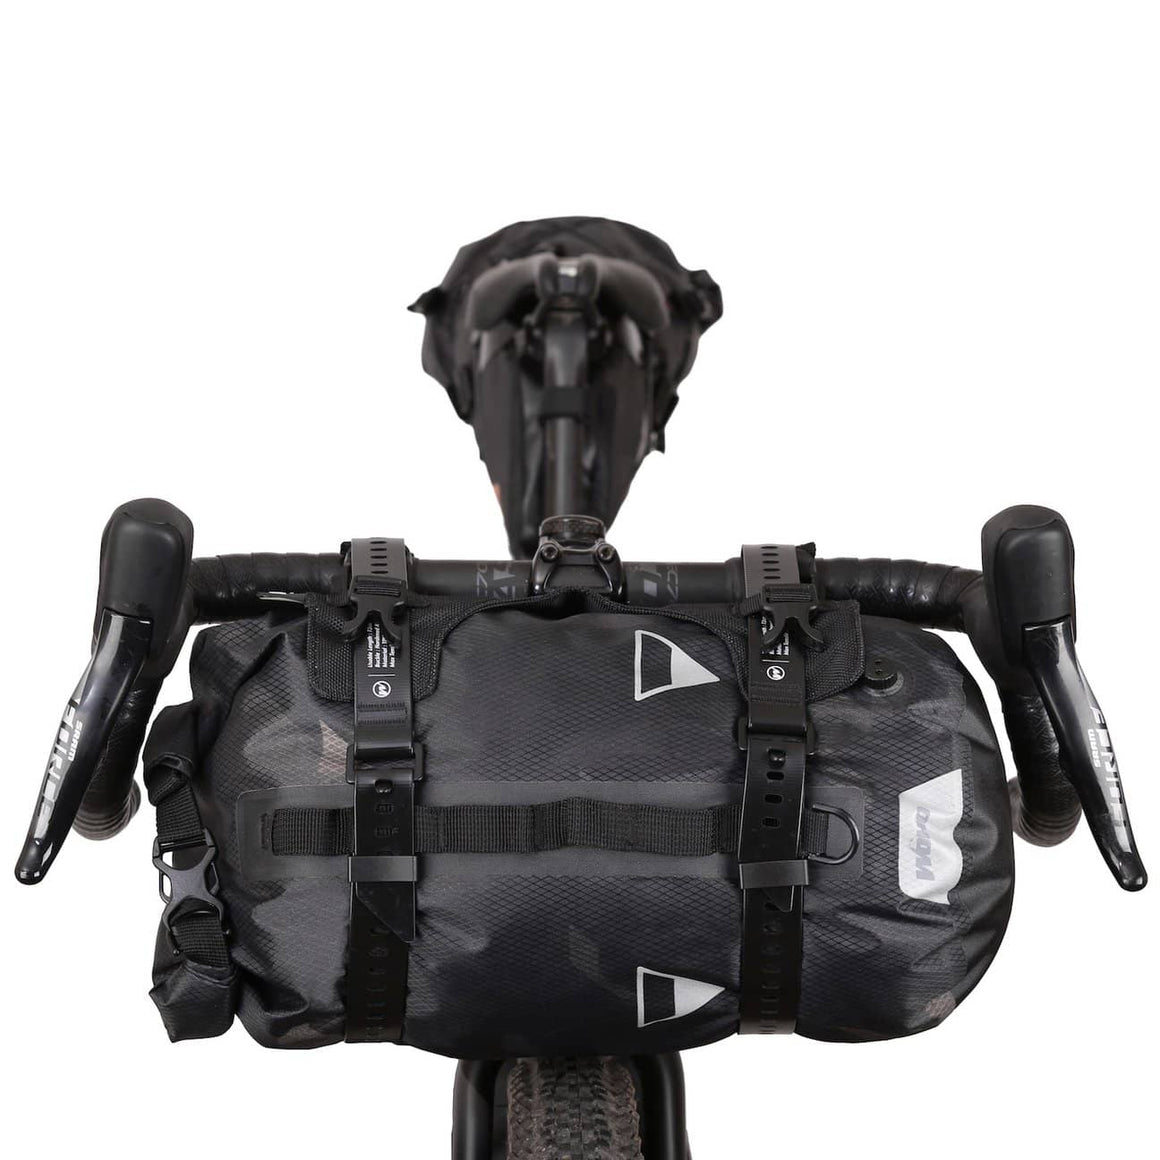 WOHO XTOURING Handlebar Harness Black + 15L DRY Bag Bundle - Cycle Touring Life